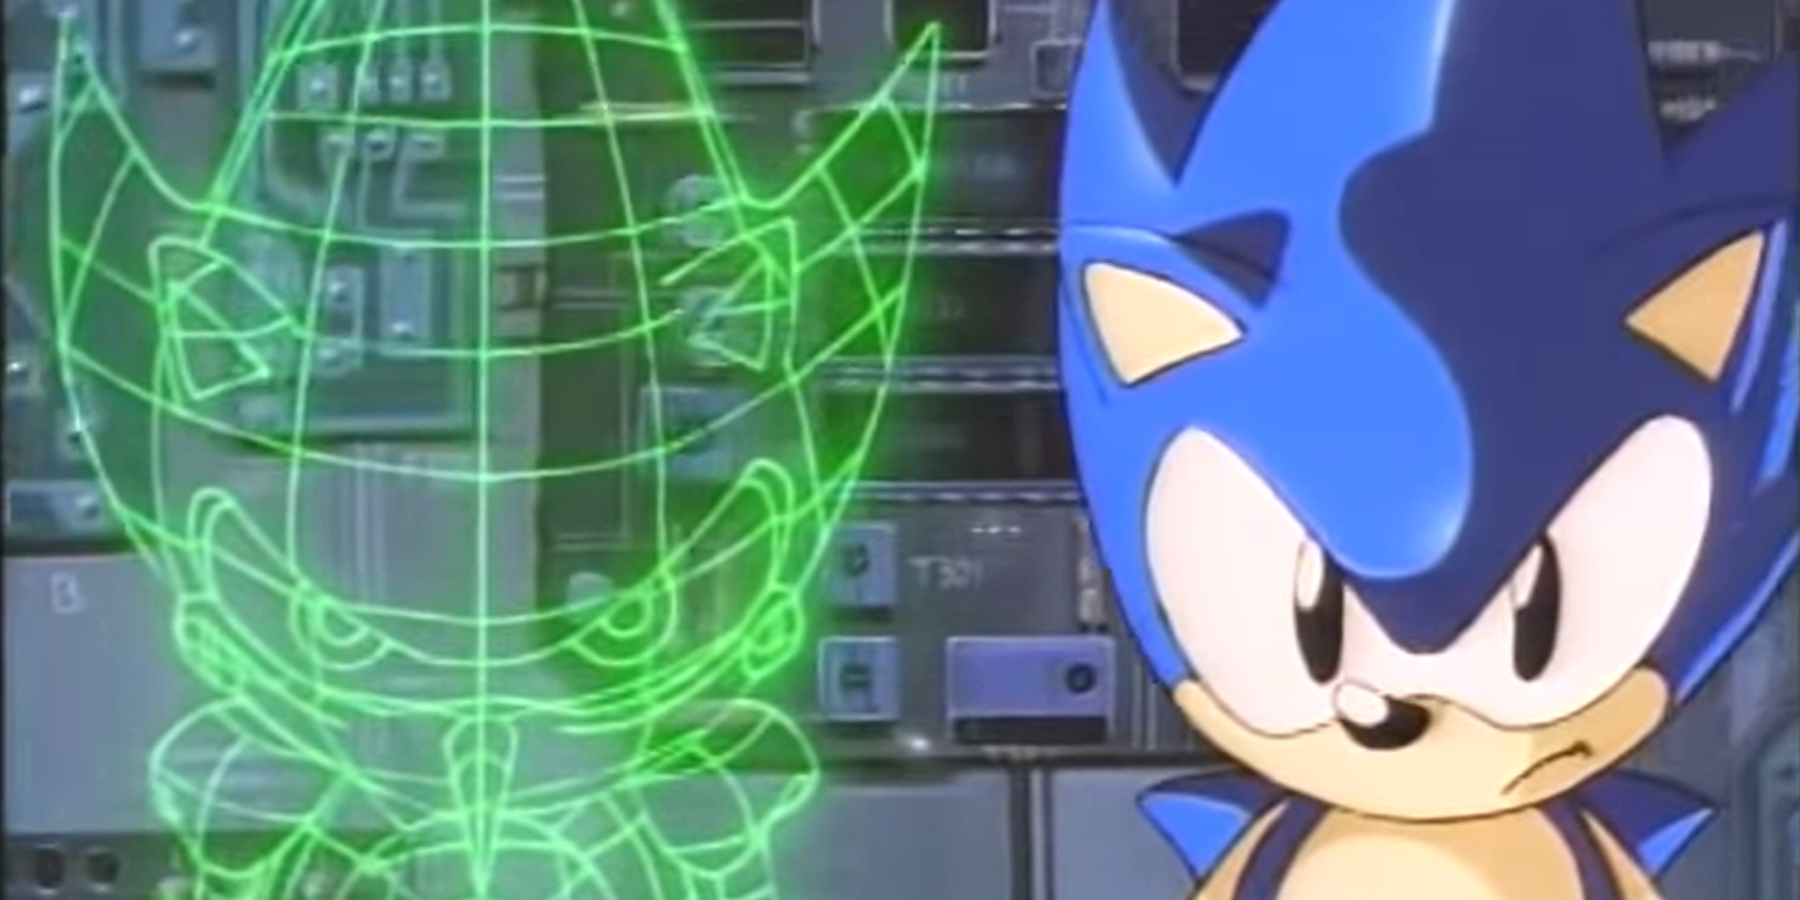 Sonic the Hedgehog OVA